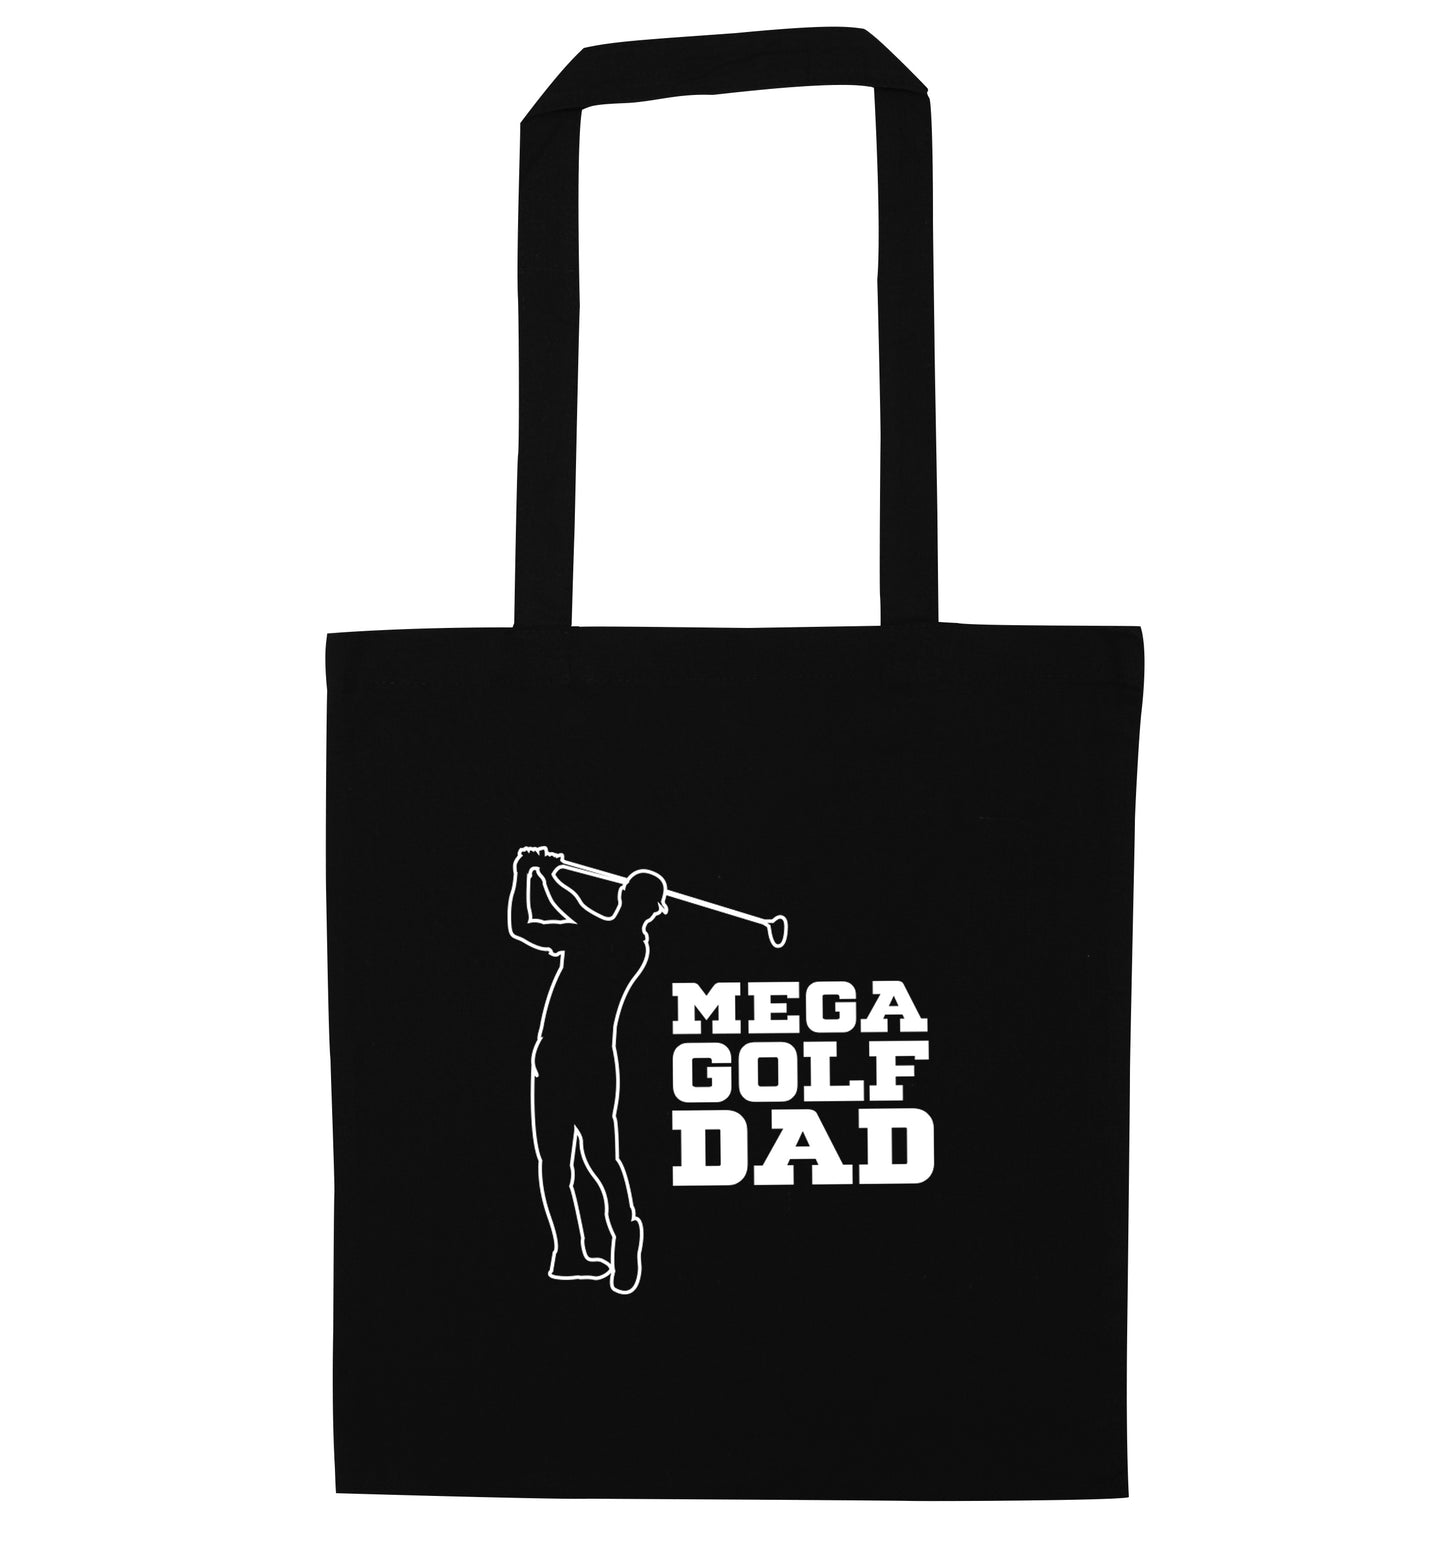 Mega golfing dad black tote bag